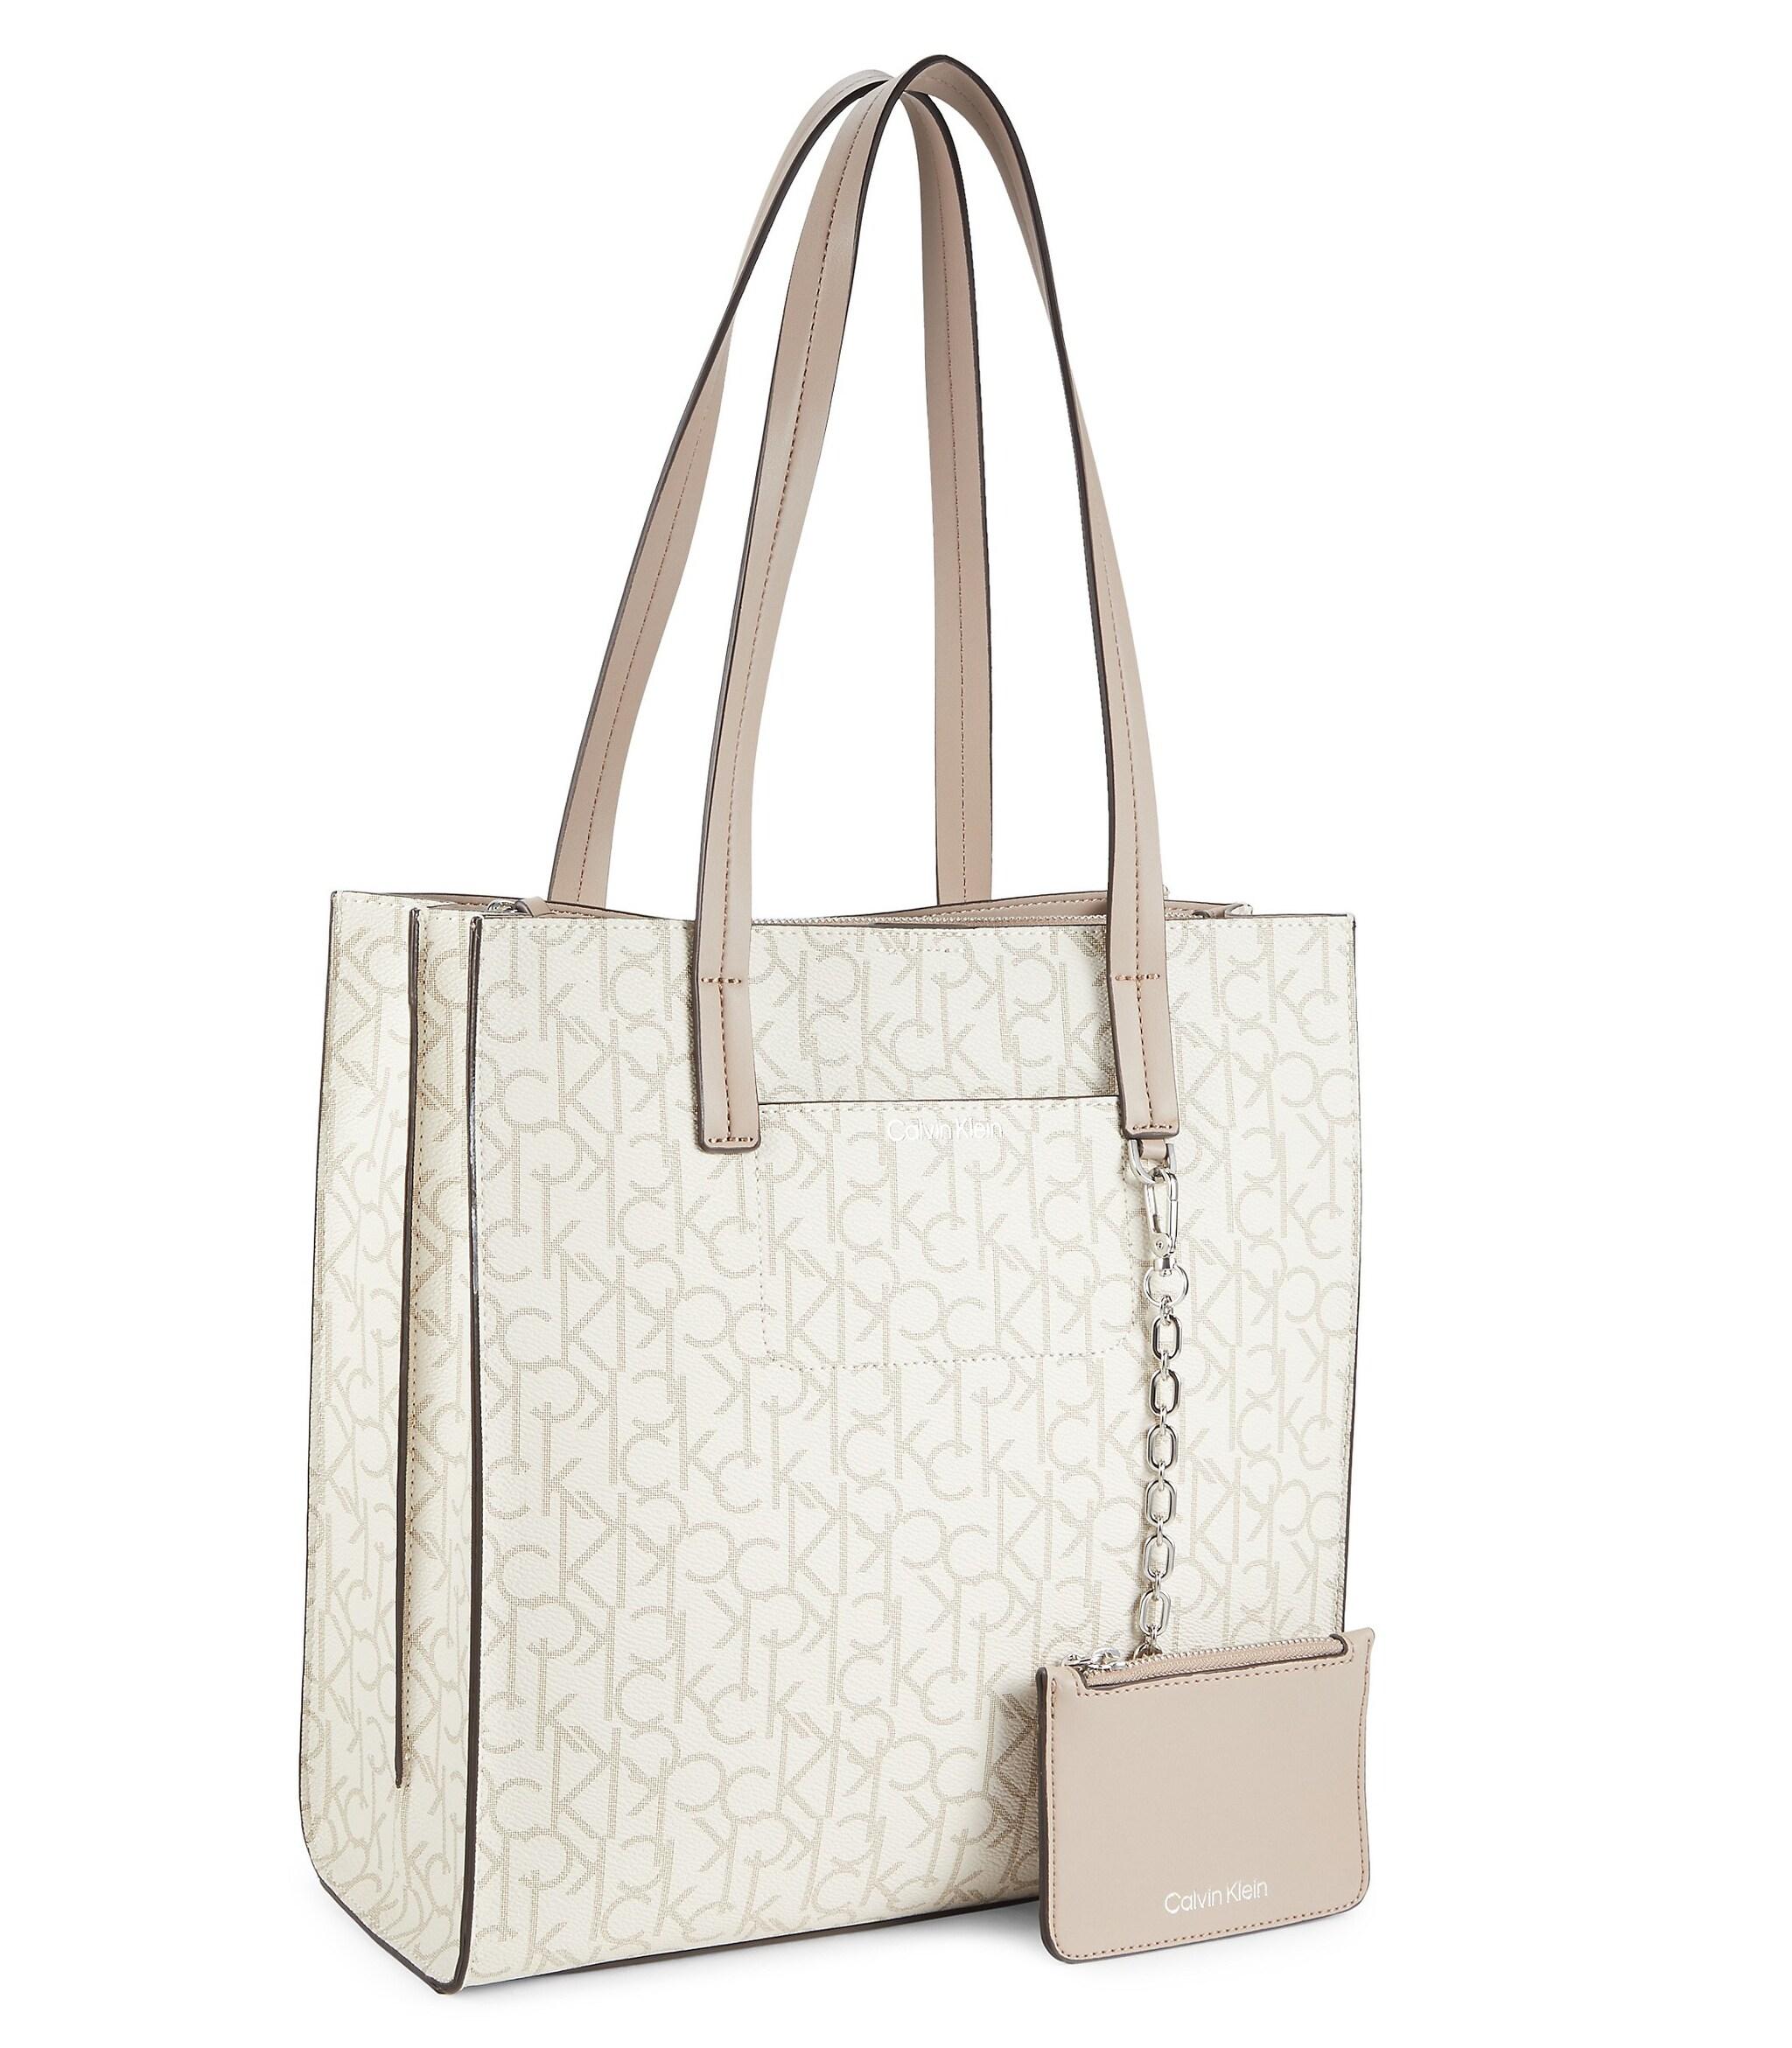 Calvin Klein Tote Bags for Women - Shop on FARFETCH